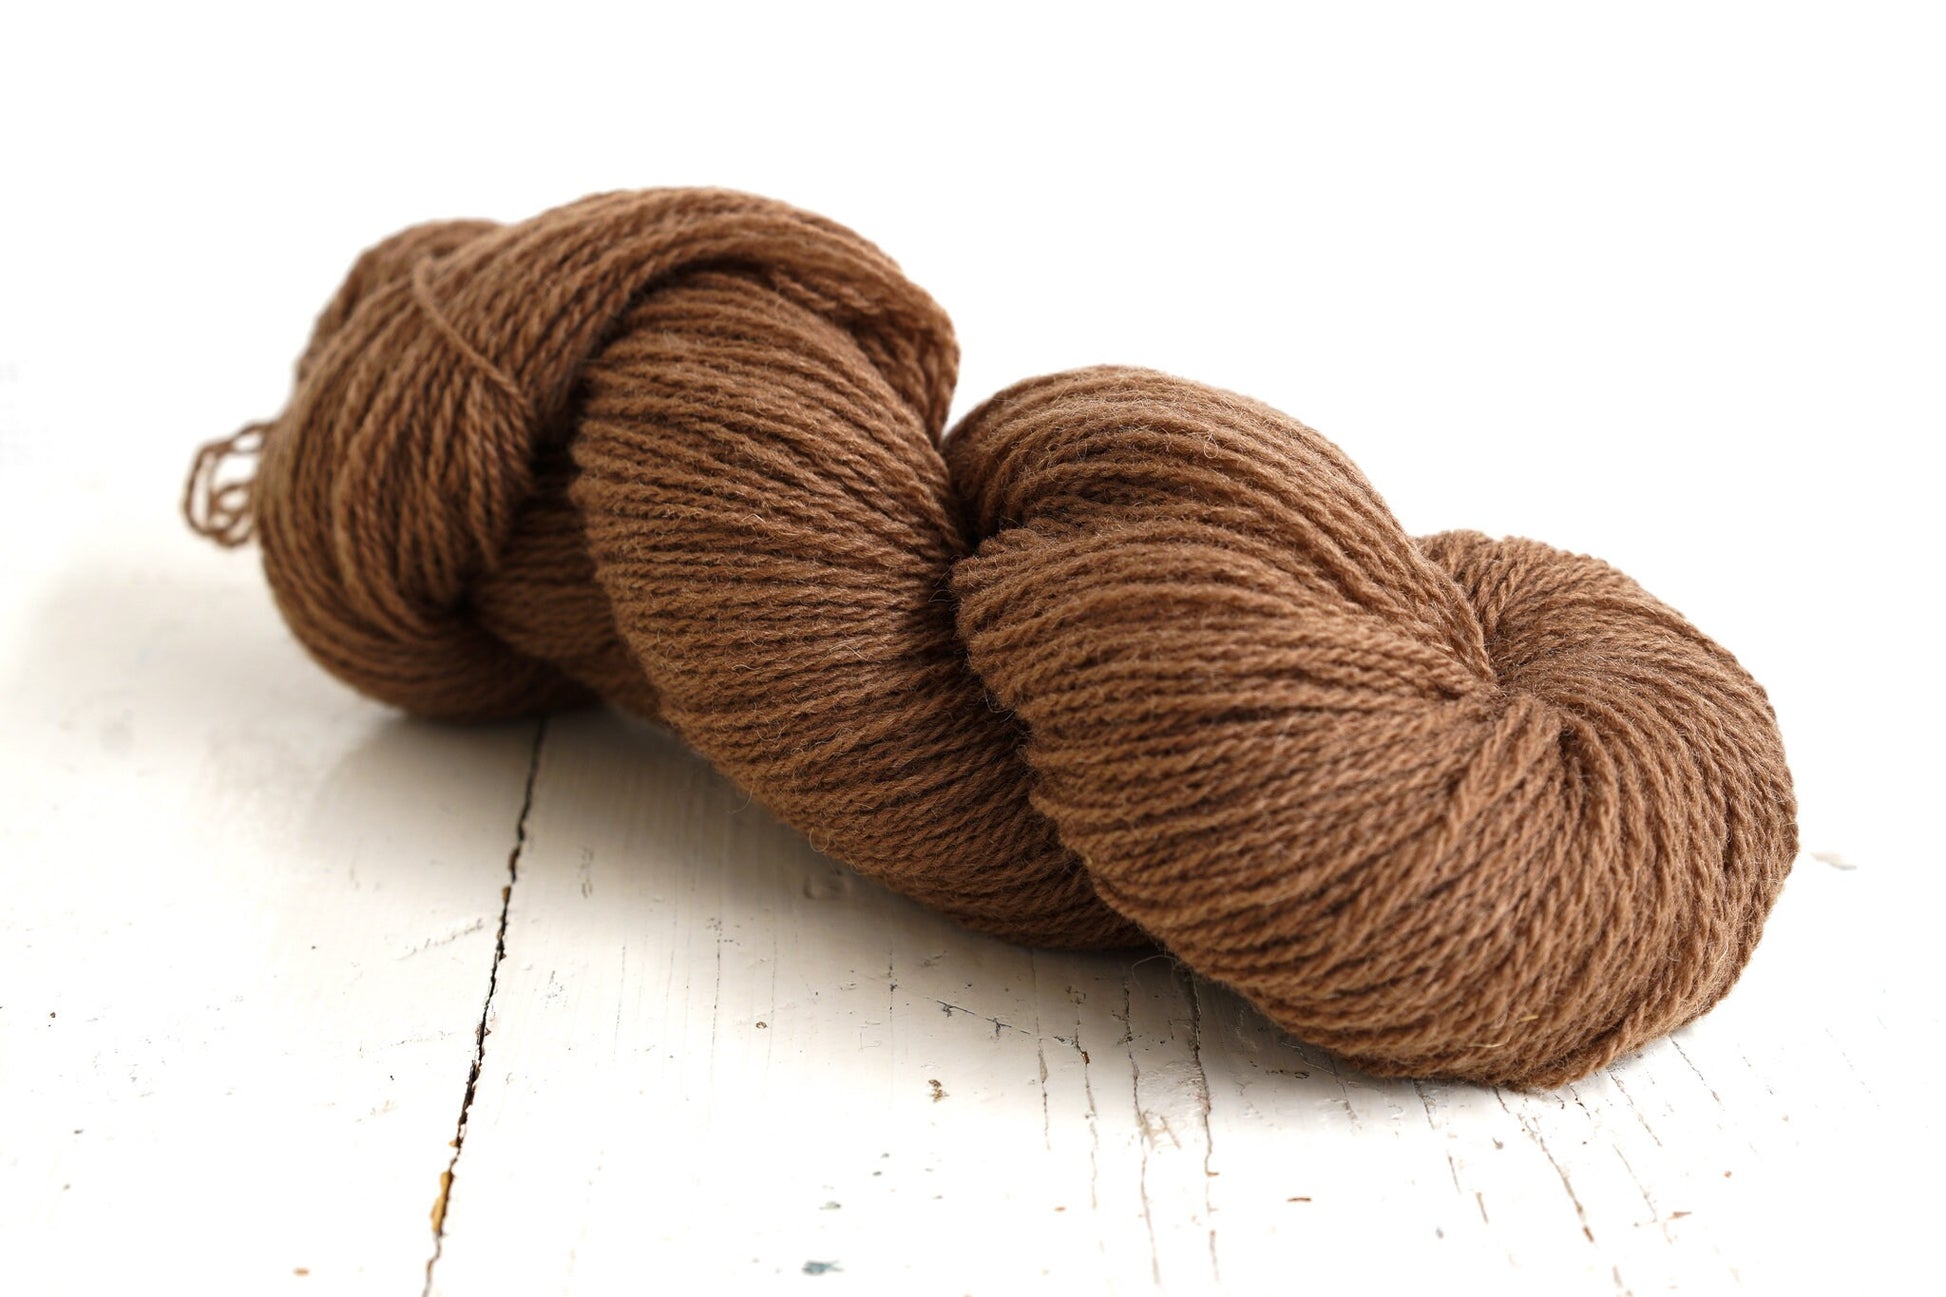 Brown and green shades of wool yarn